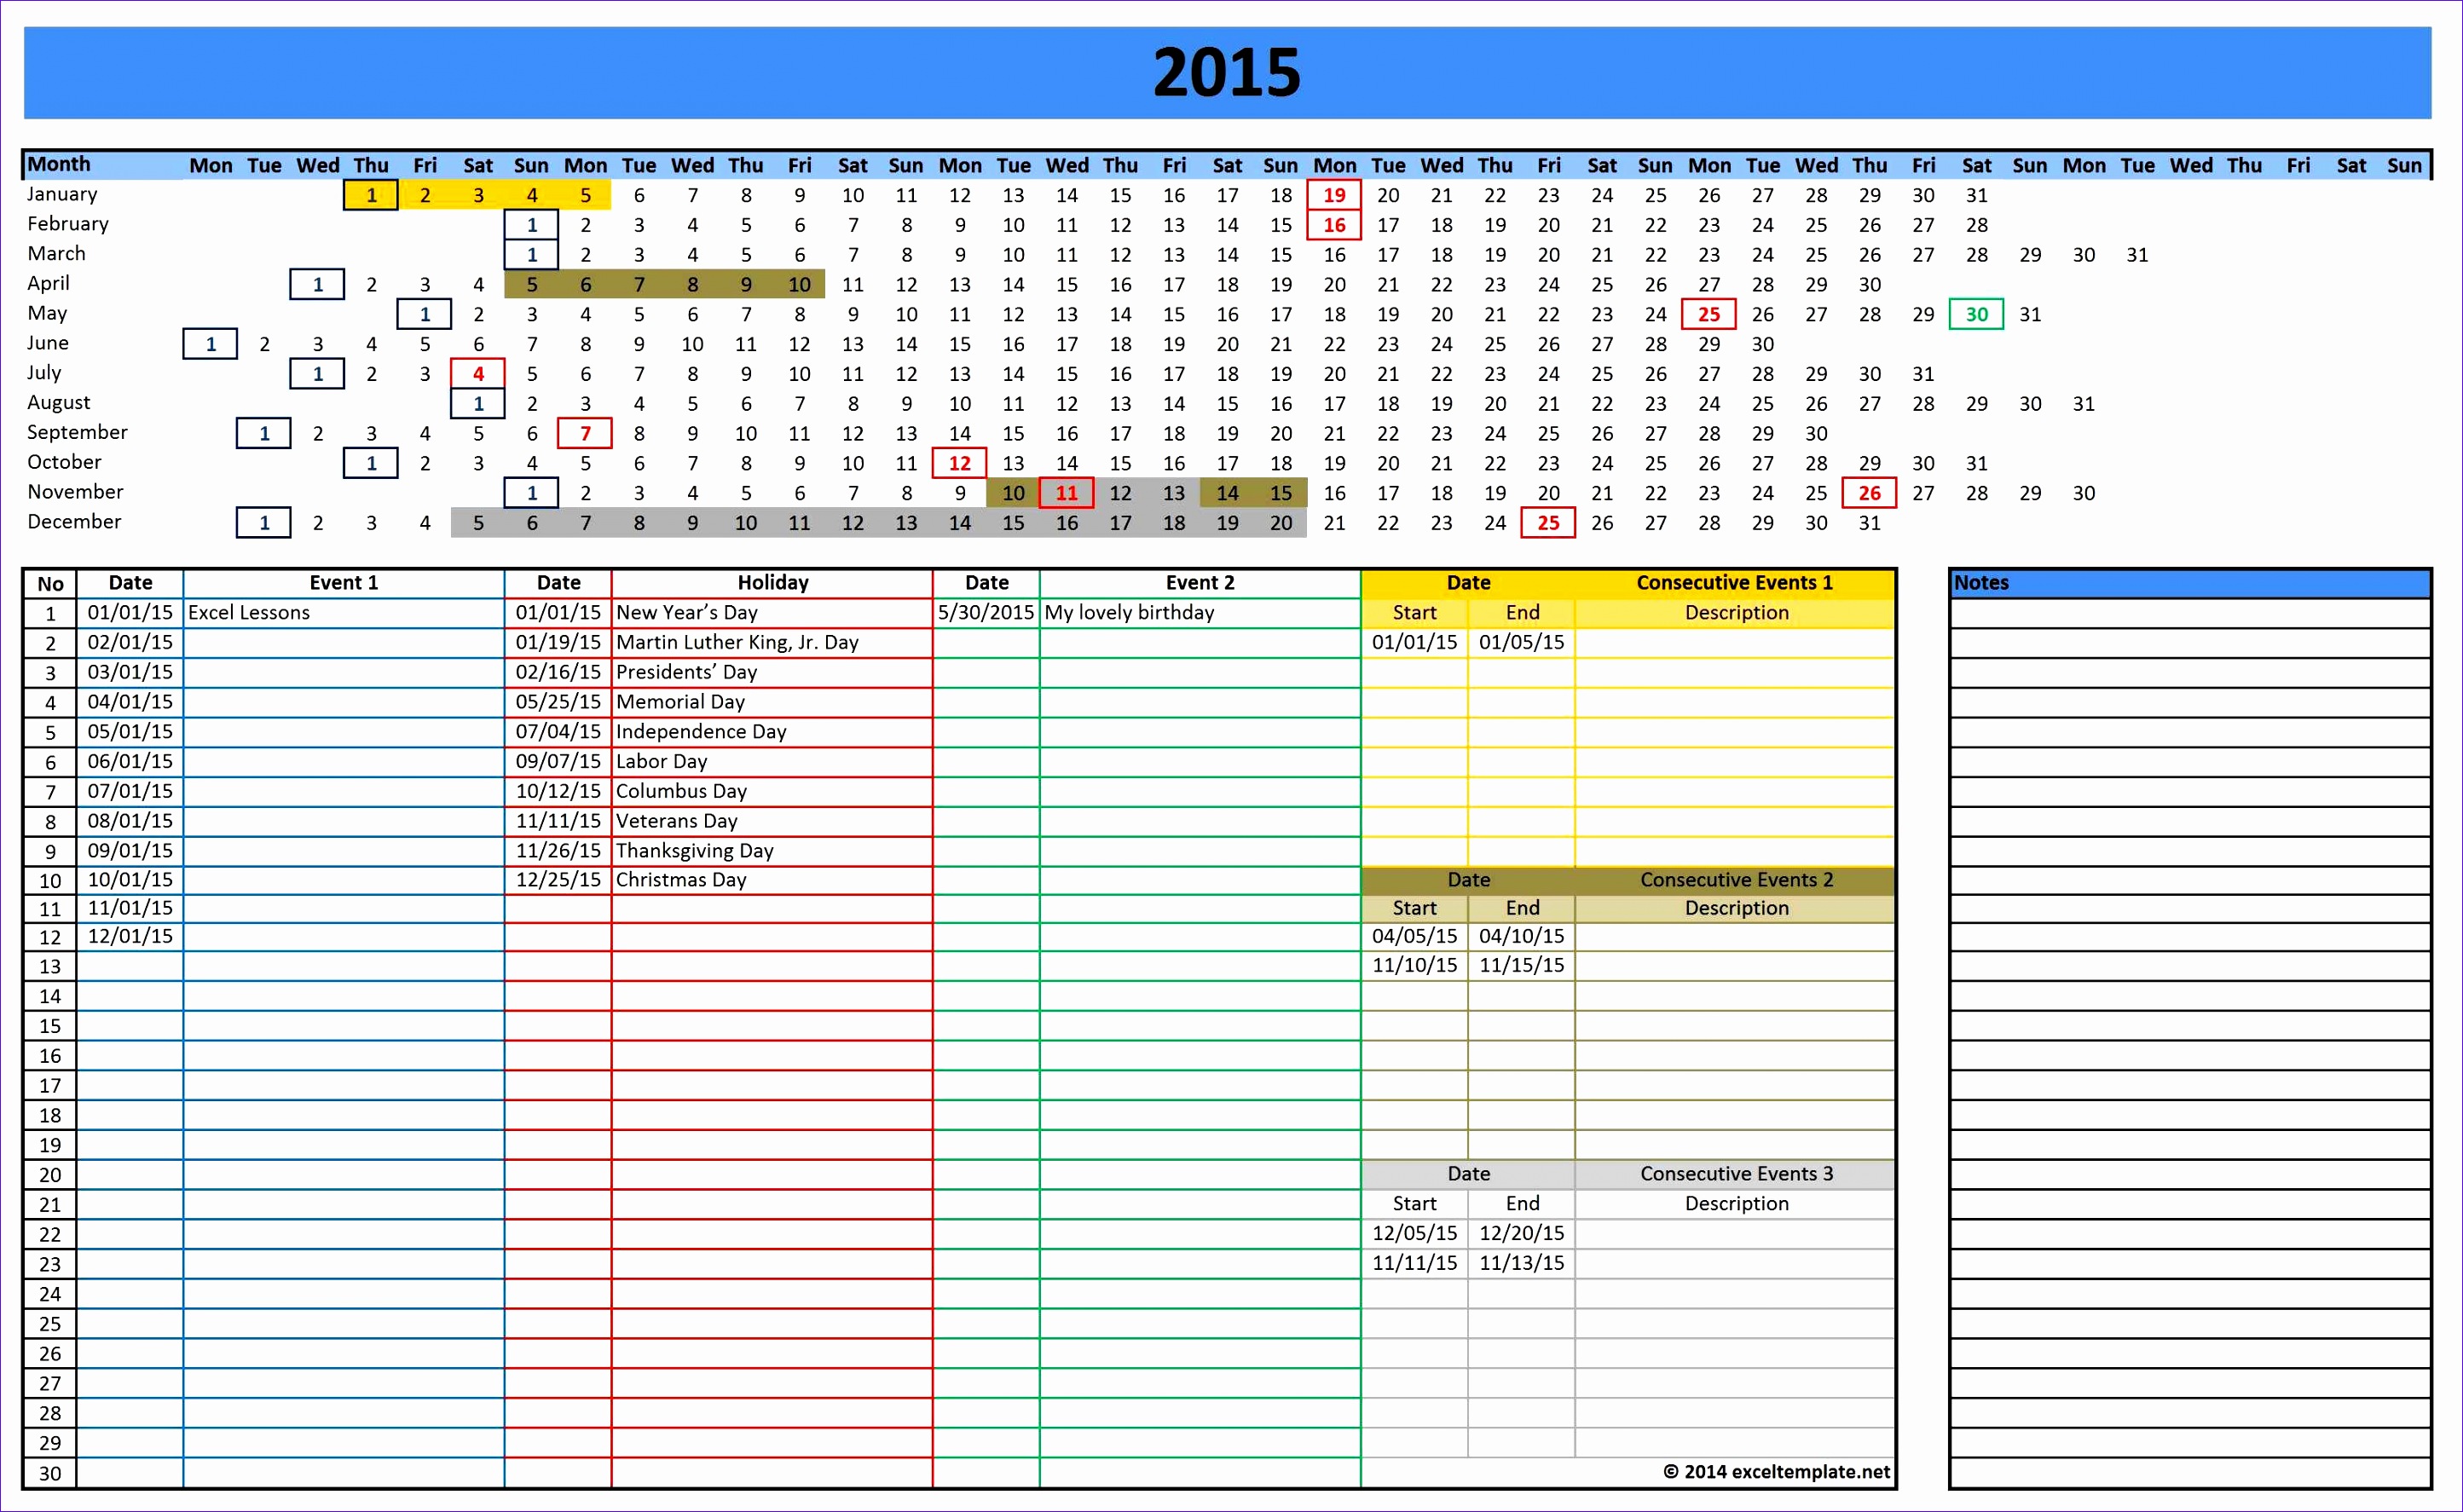 excel template calendar 2015 calendar linear NjSAMu